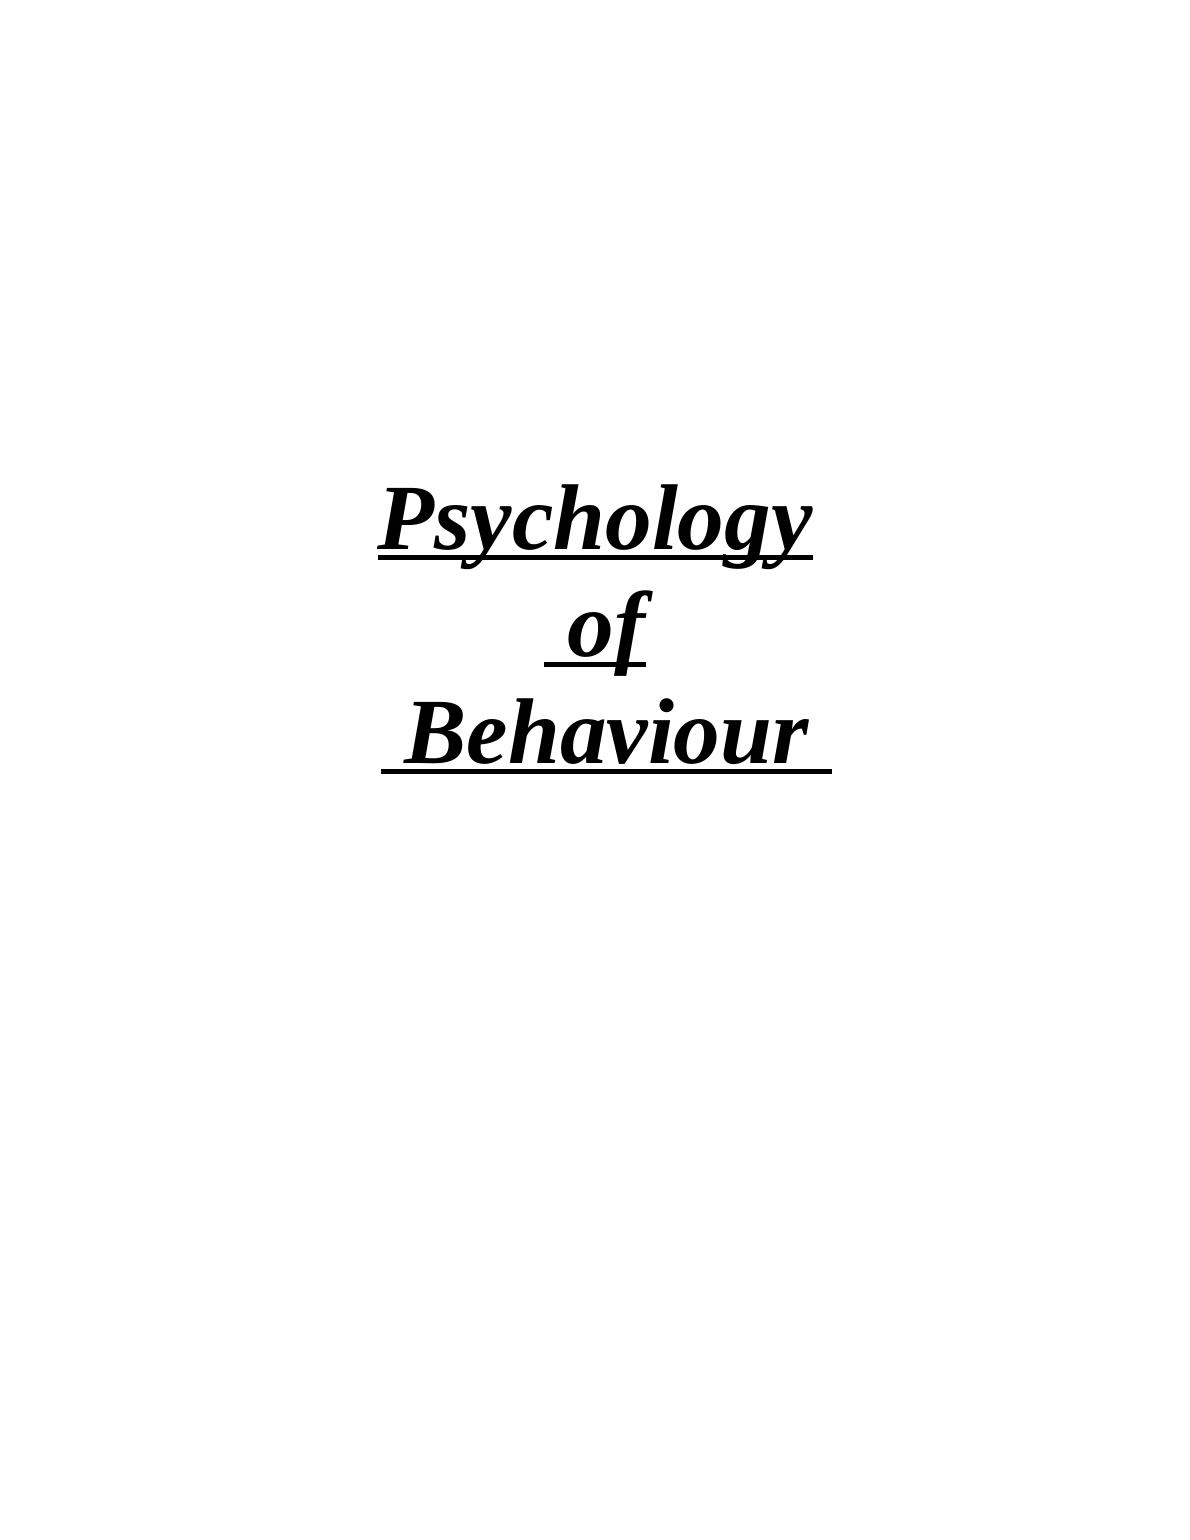 Behavioural Psychology Assignment Solution_1